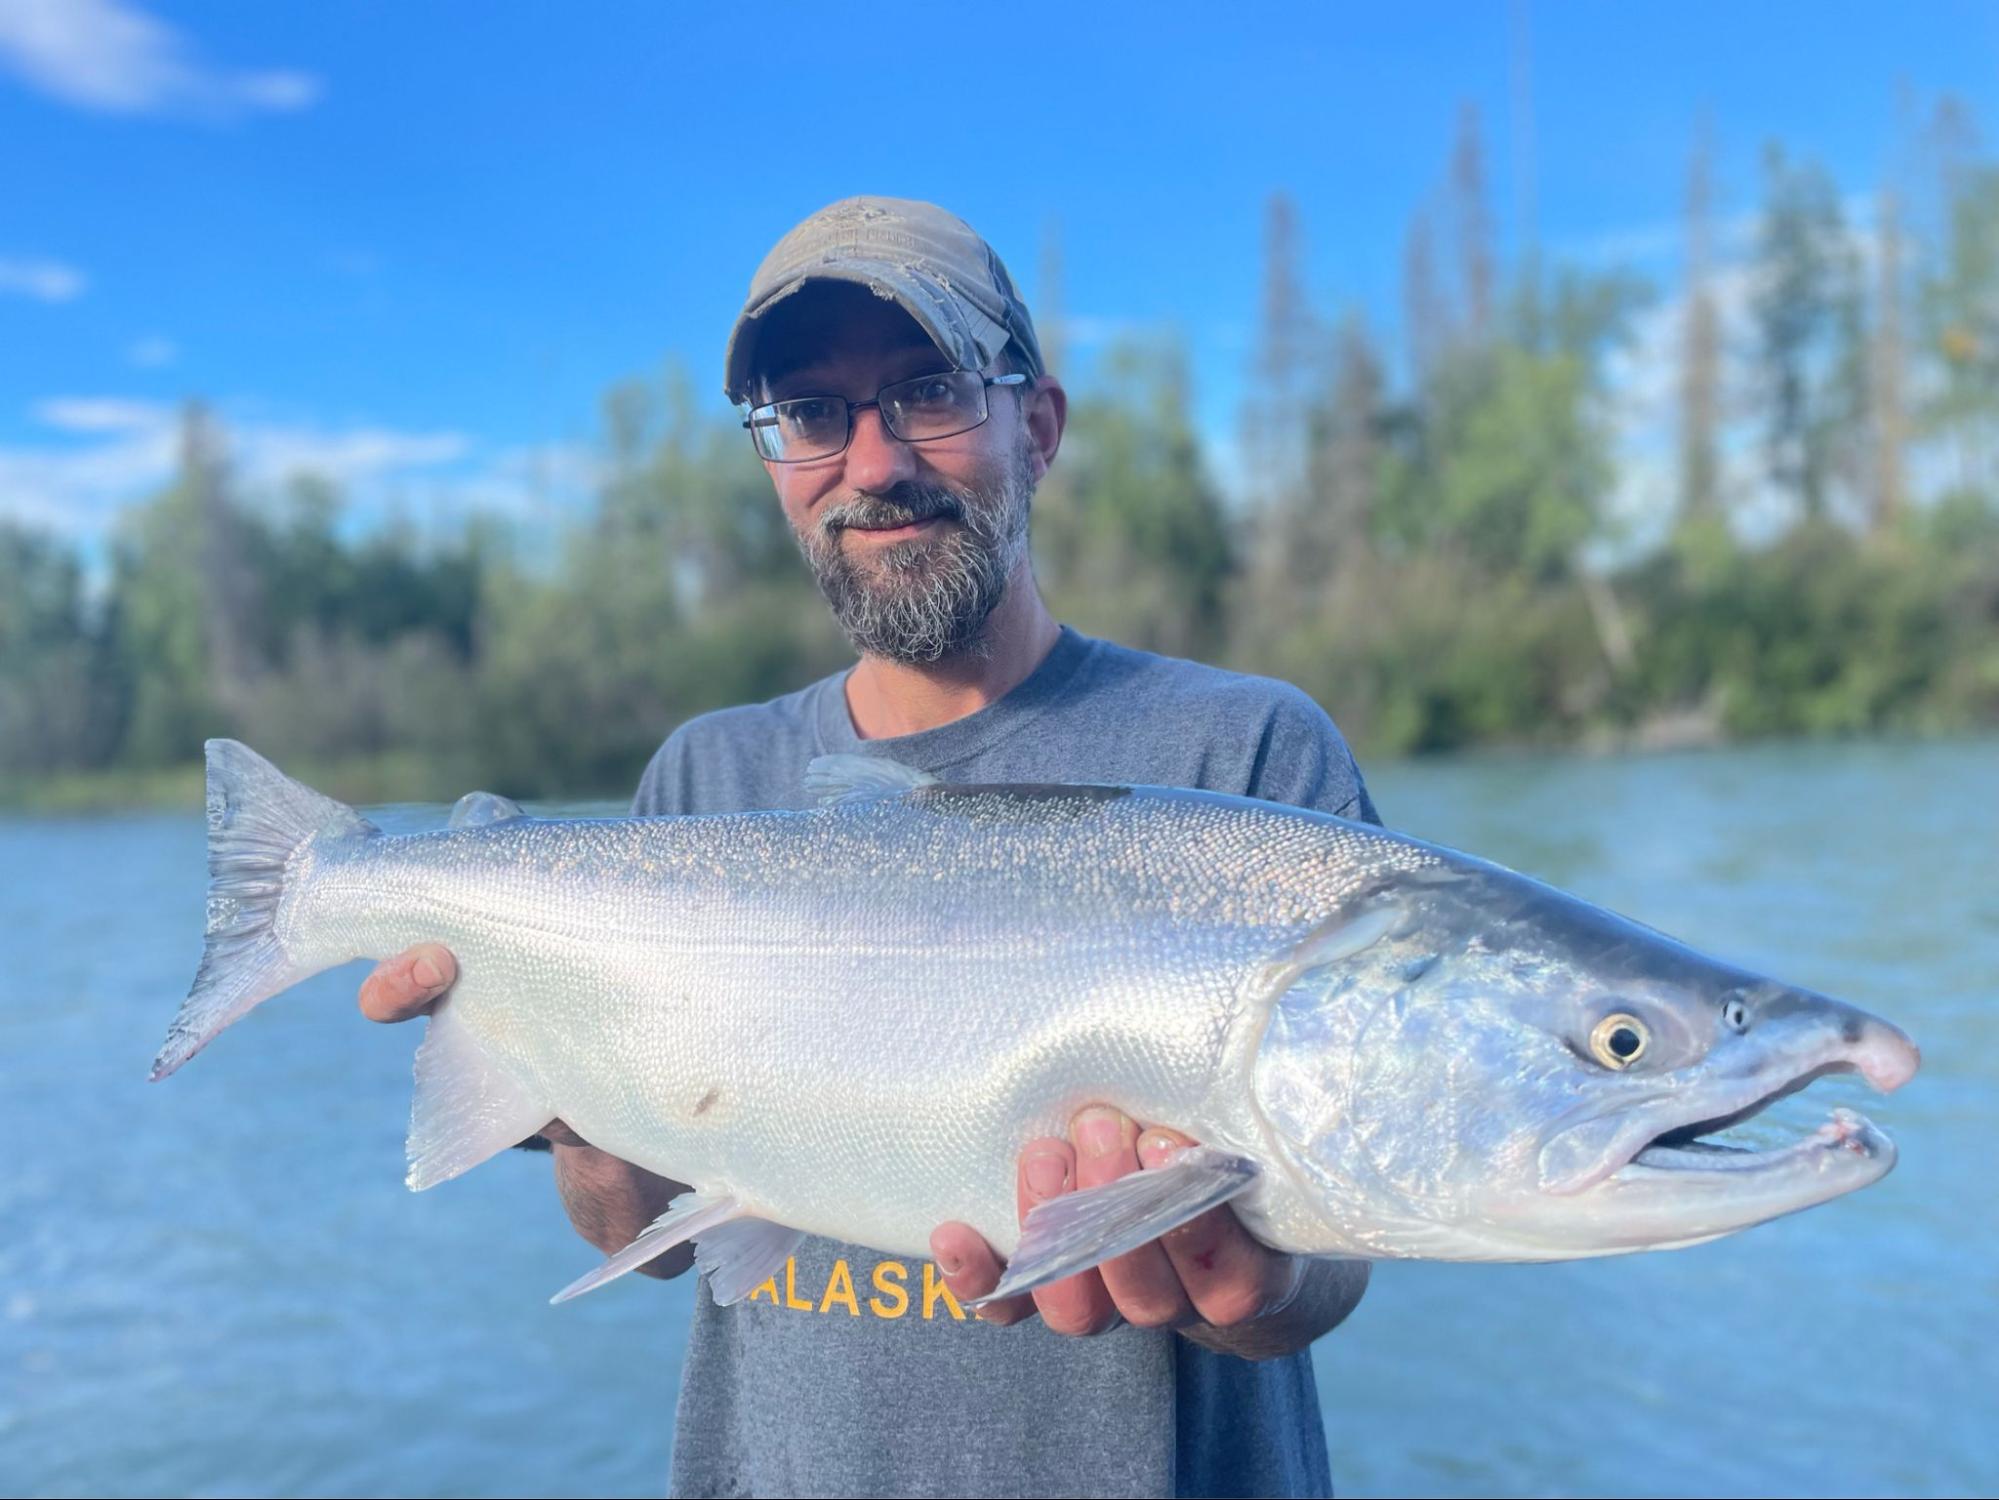 An avid angler experiences the Alaska fishing season.